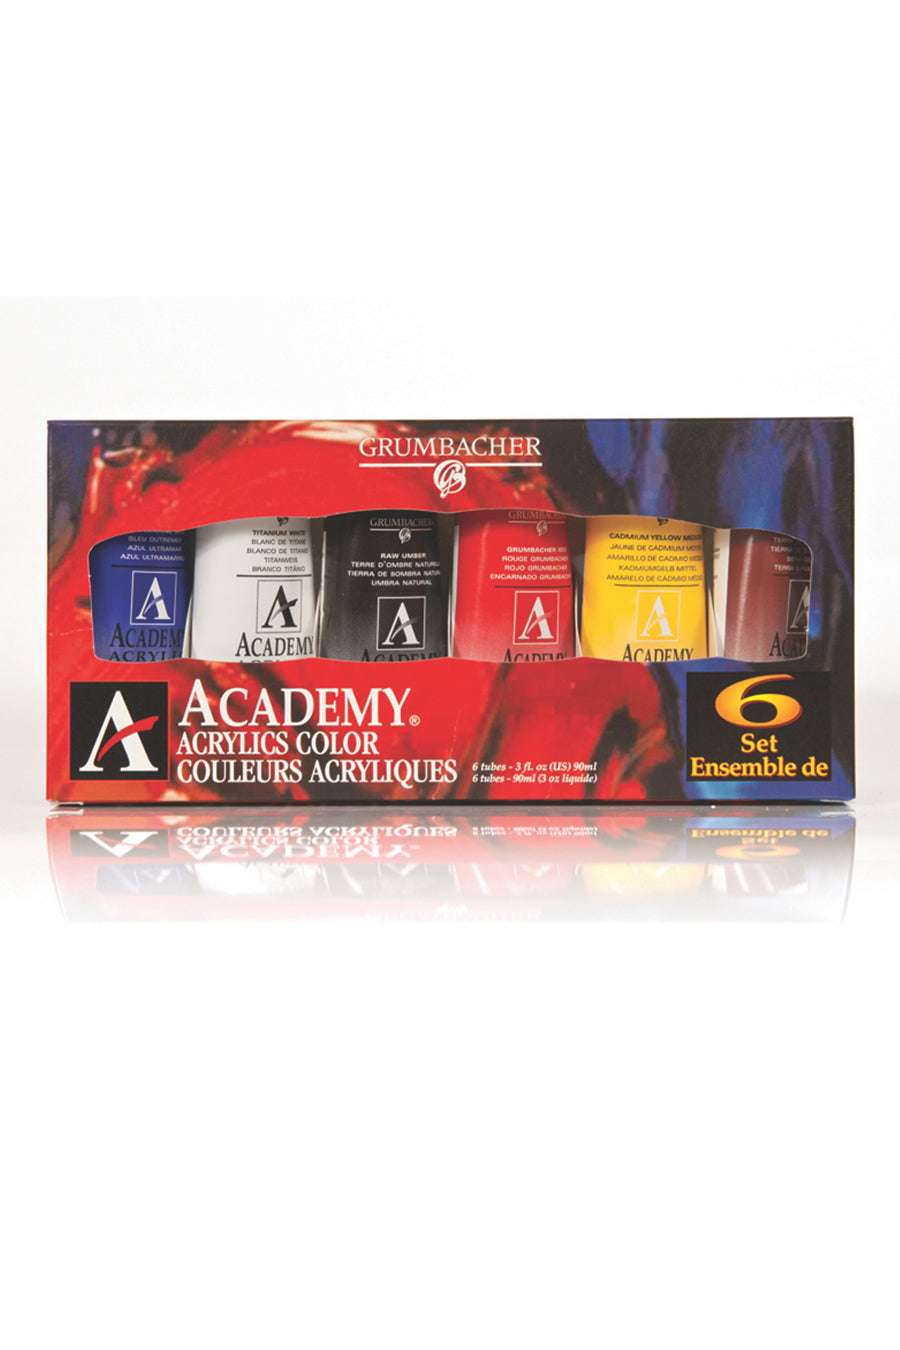 Grumbacher Academy Acrylic Colors